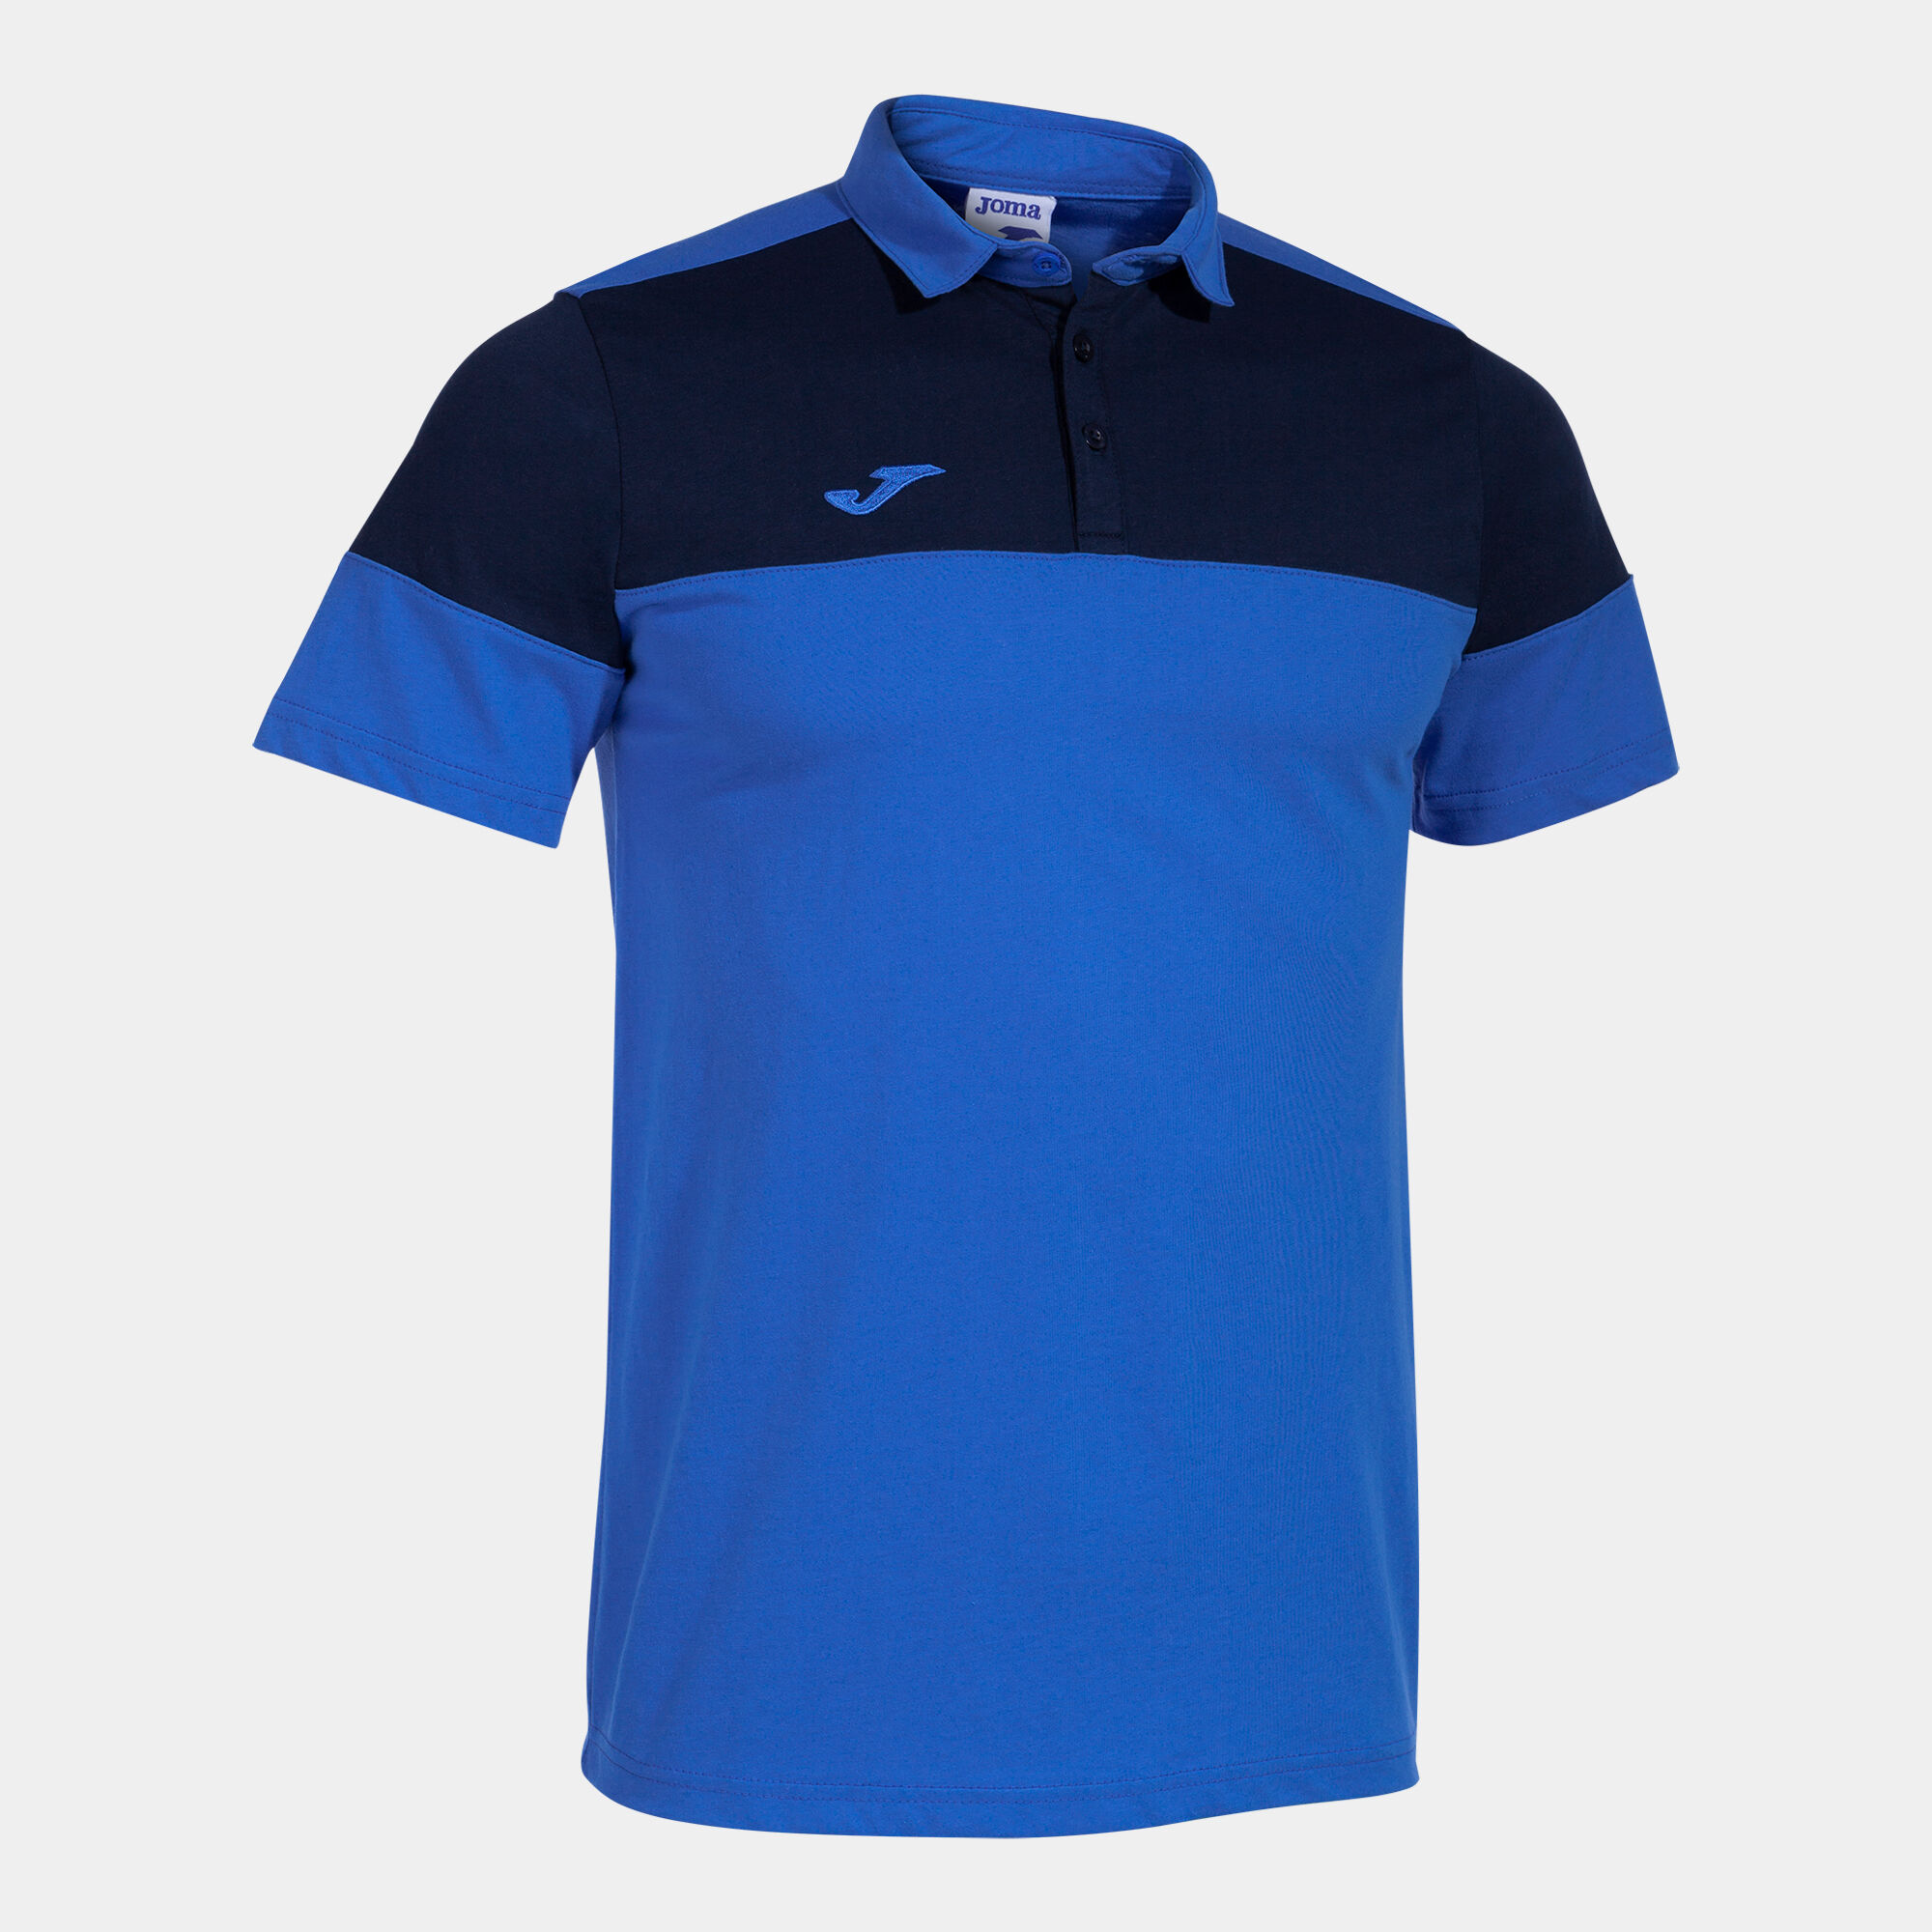 Polo shirt short-sleeve man Crew V royal blue navy blue